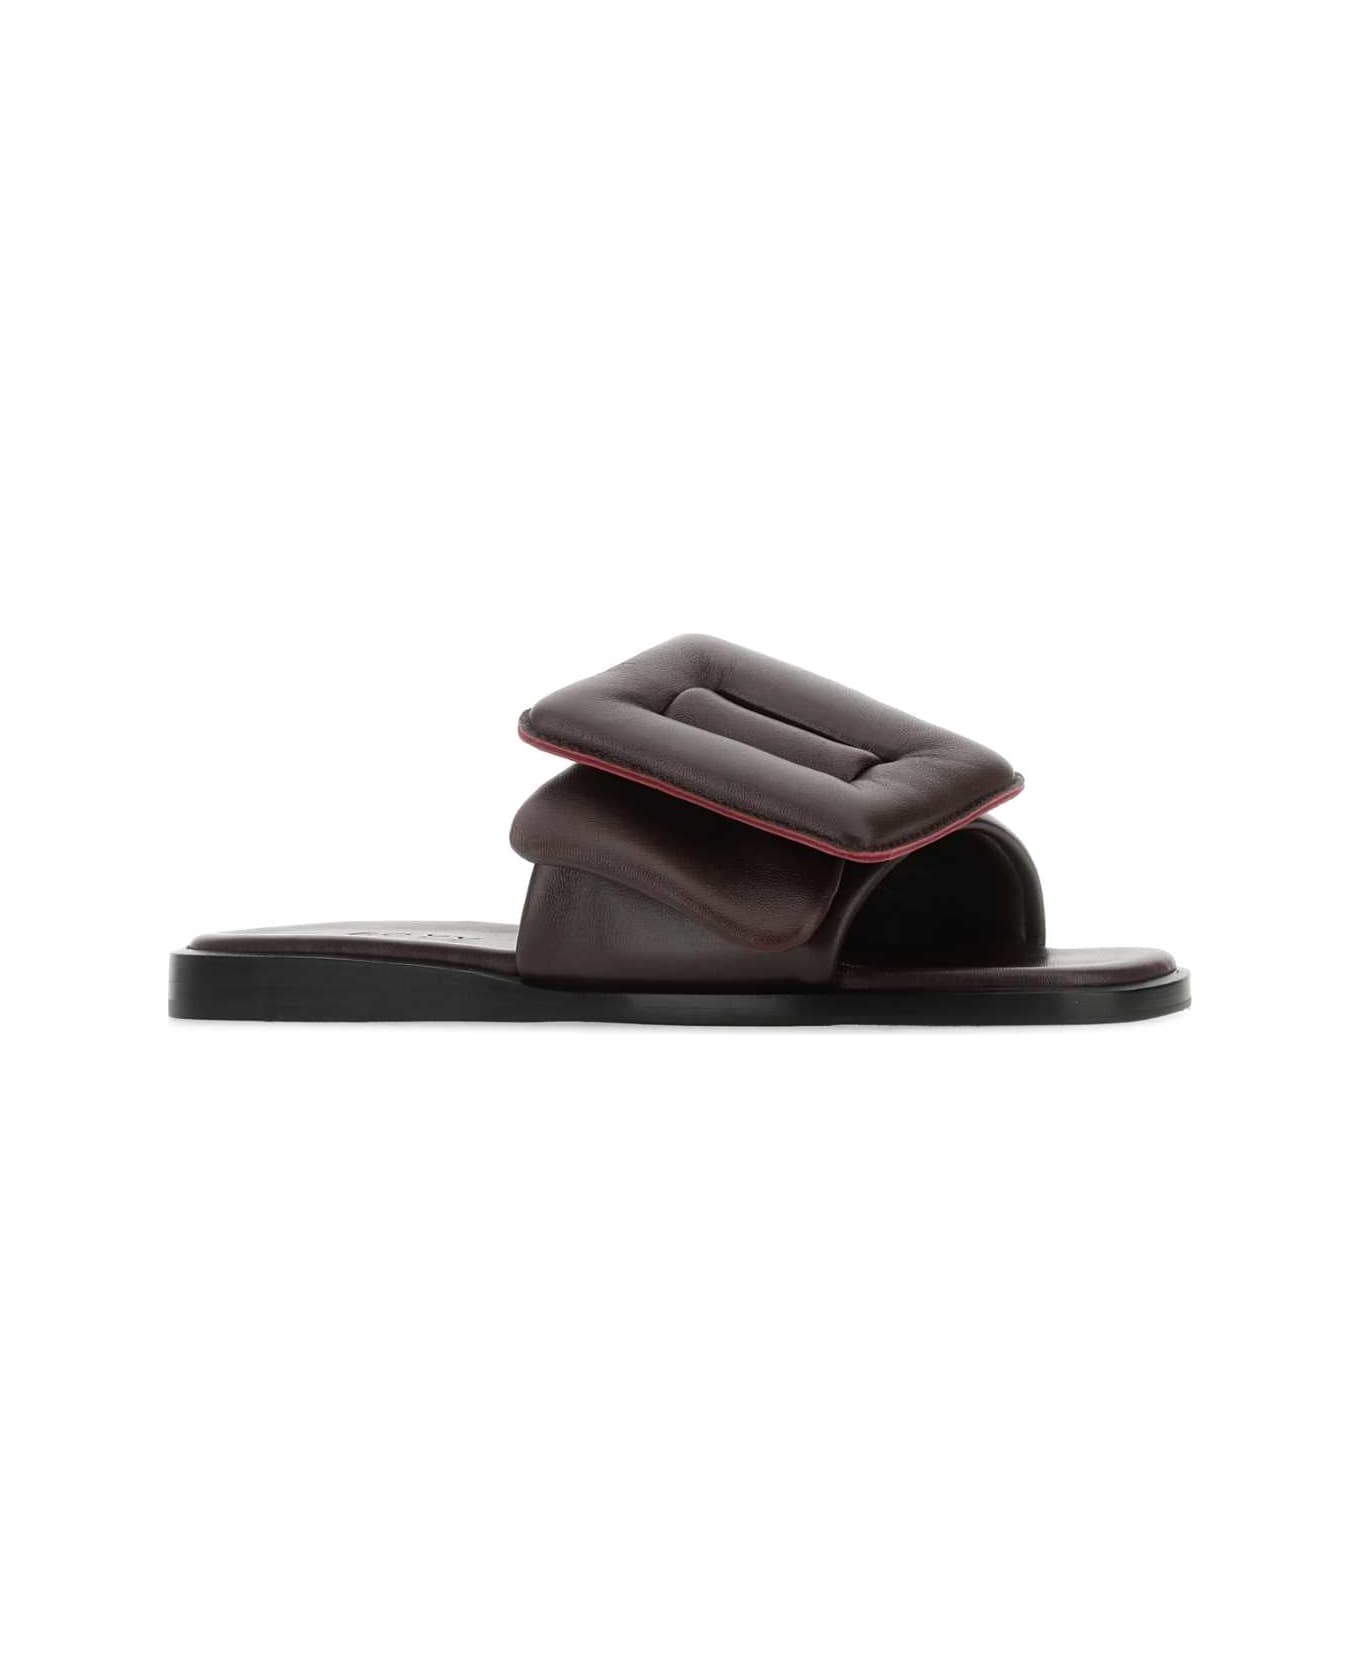 BOYY Chocolate Leather Puffy Slippers - CAROB